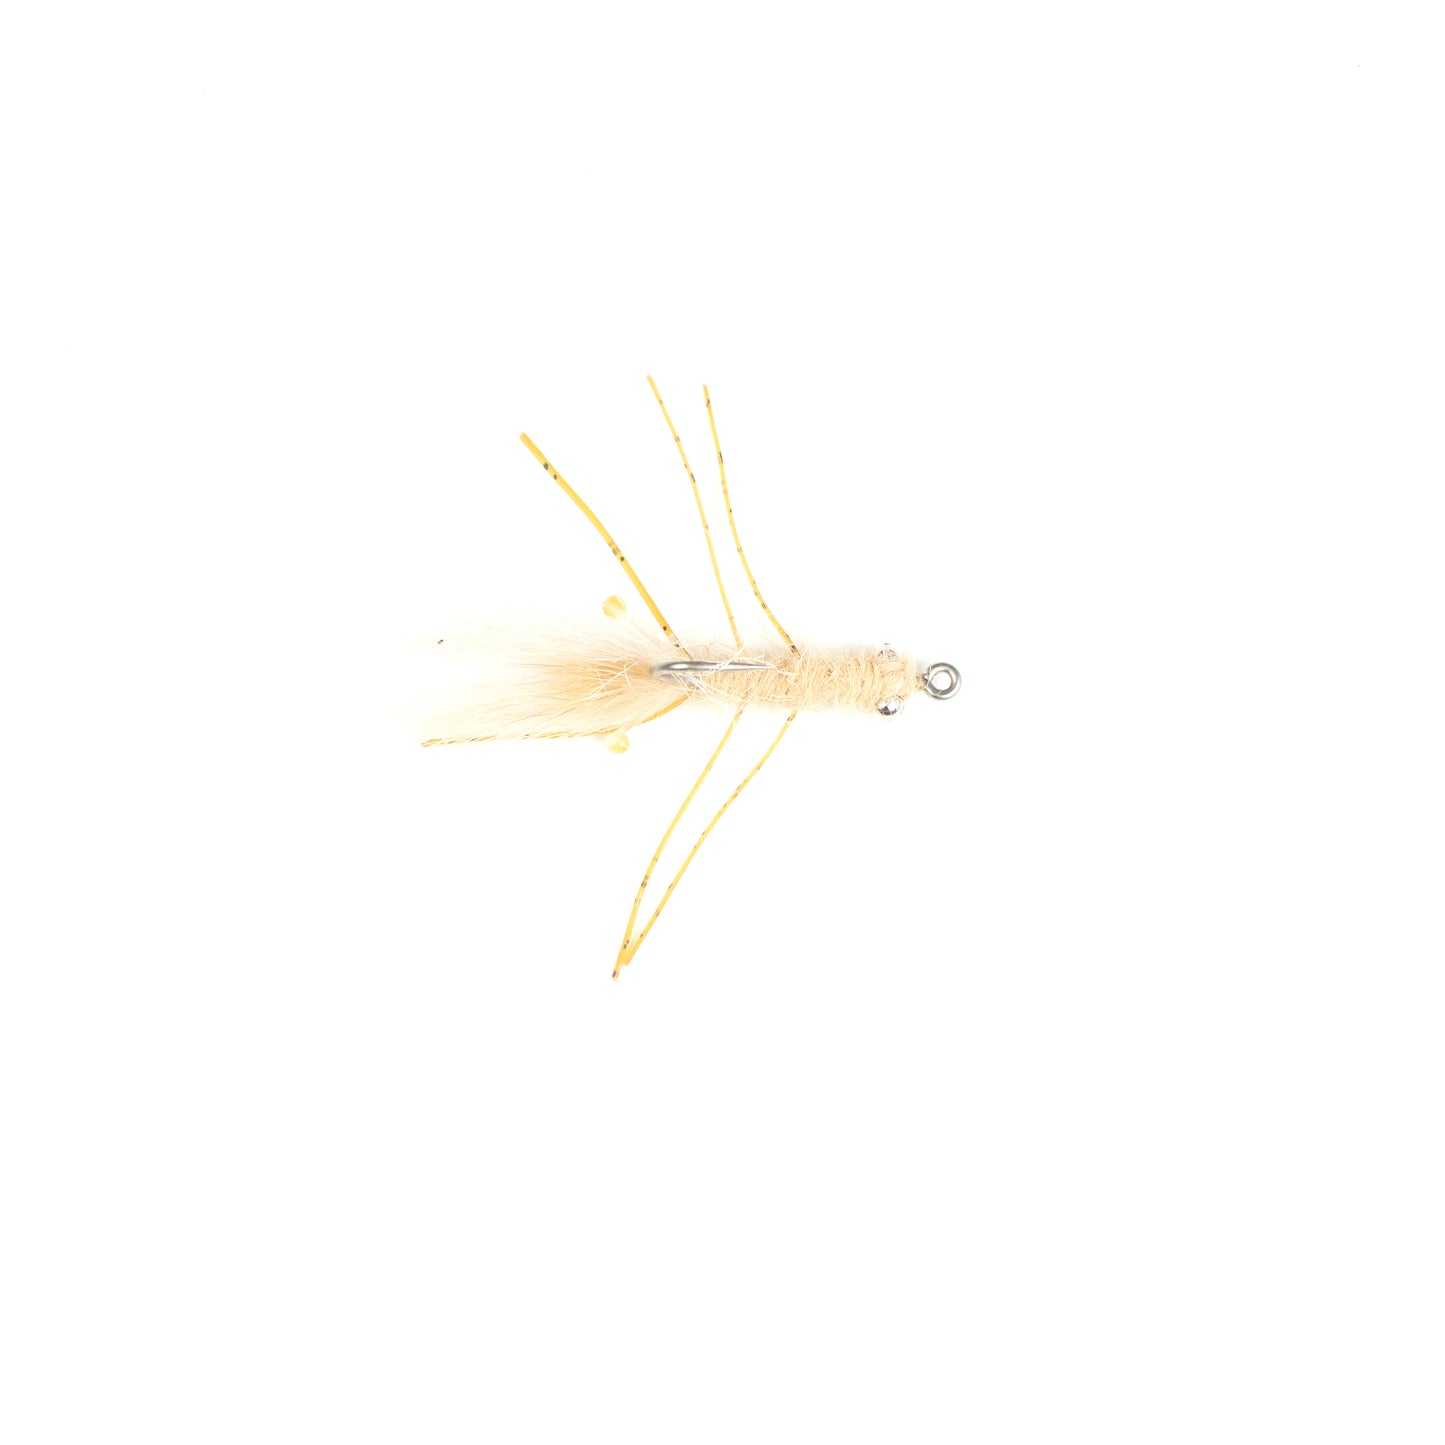 Veverka's Mantis Shrimp